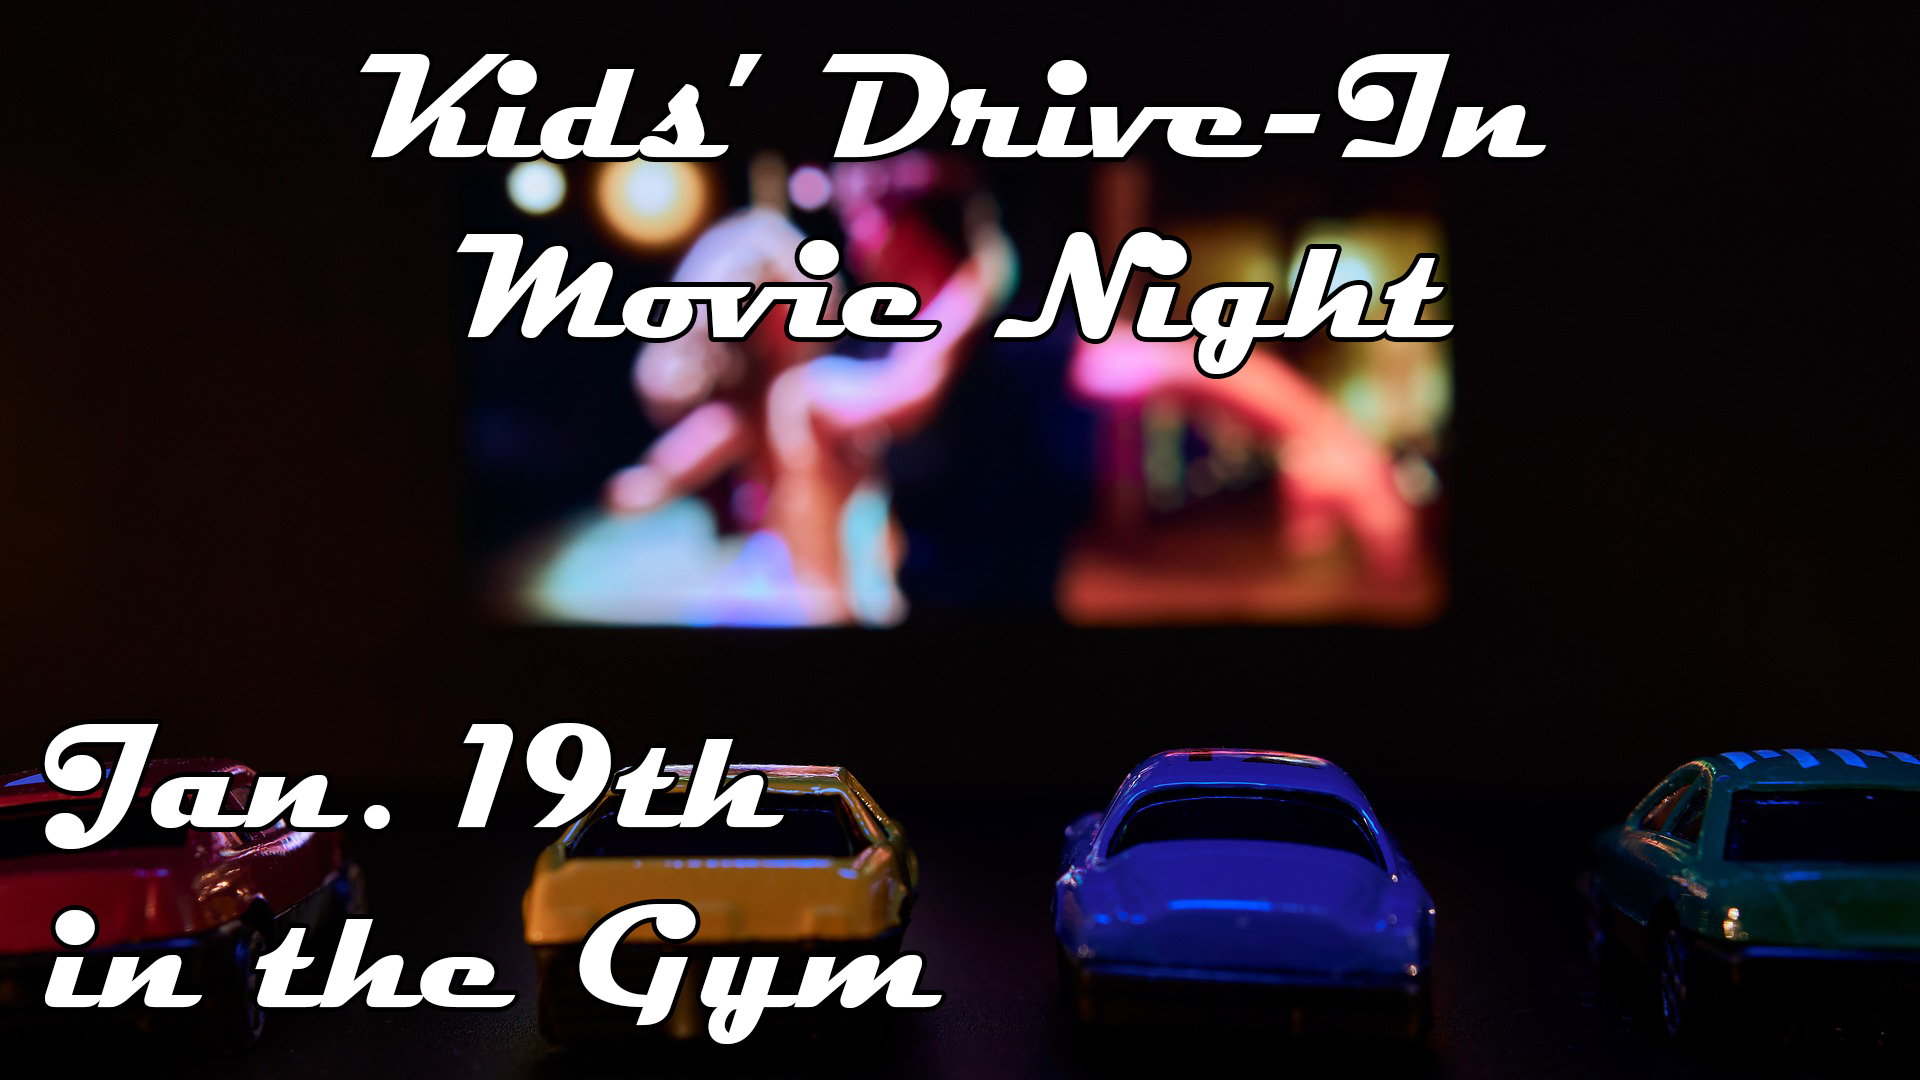 Fee Fee Baptist Church is having a kids drive in movie night on January 19